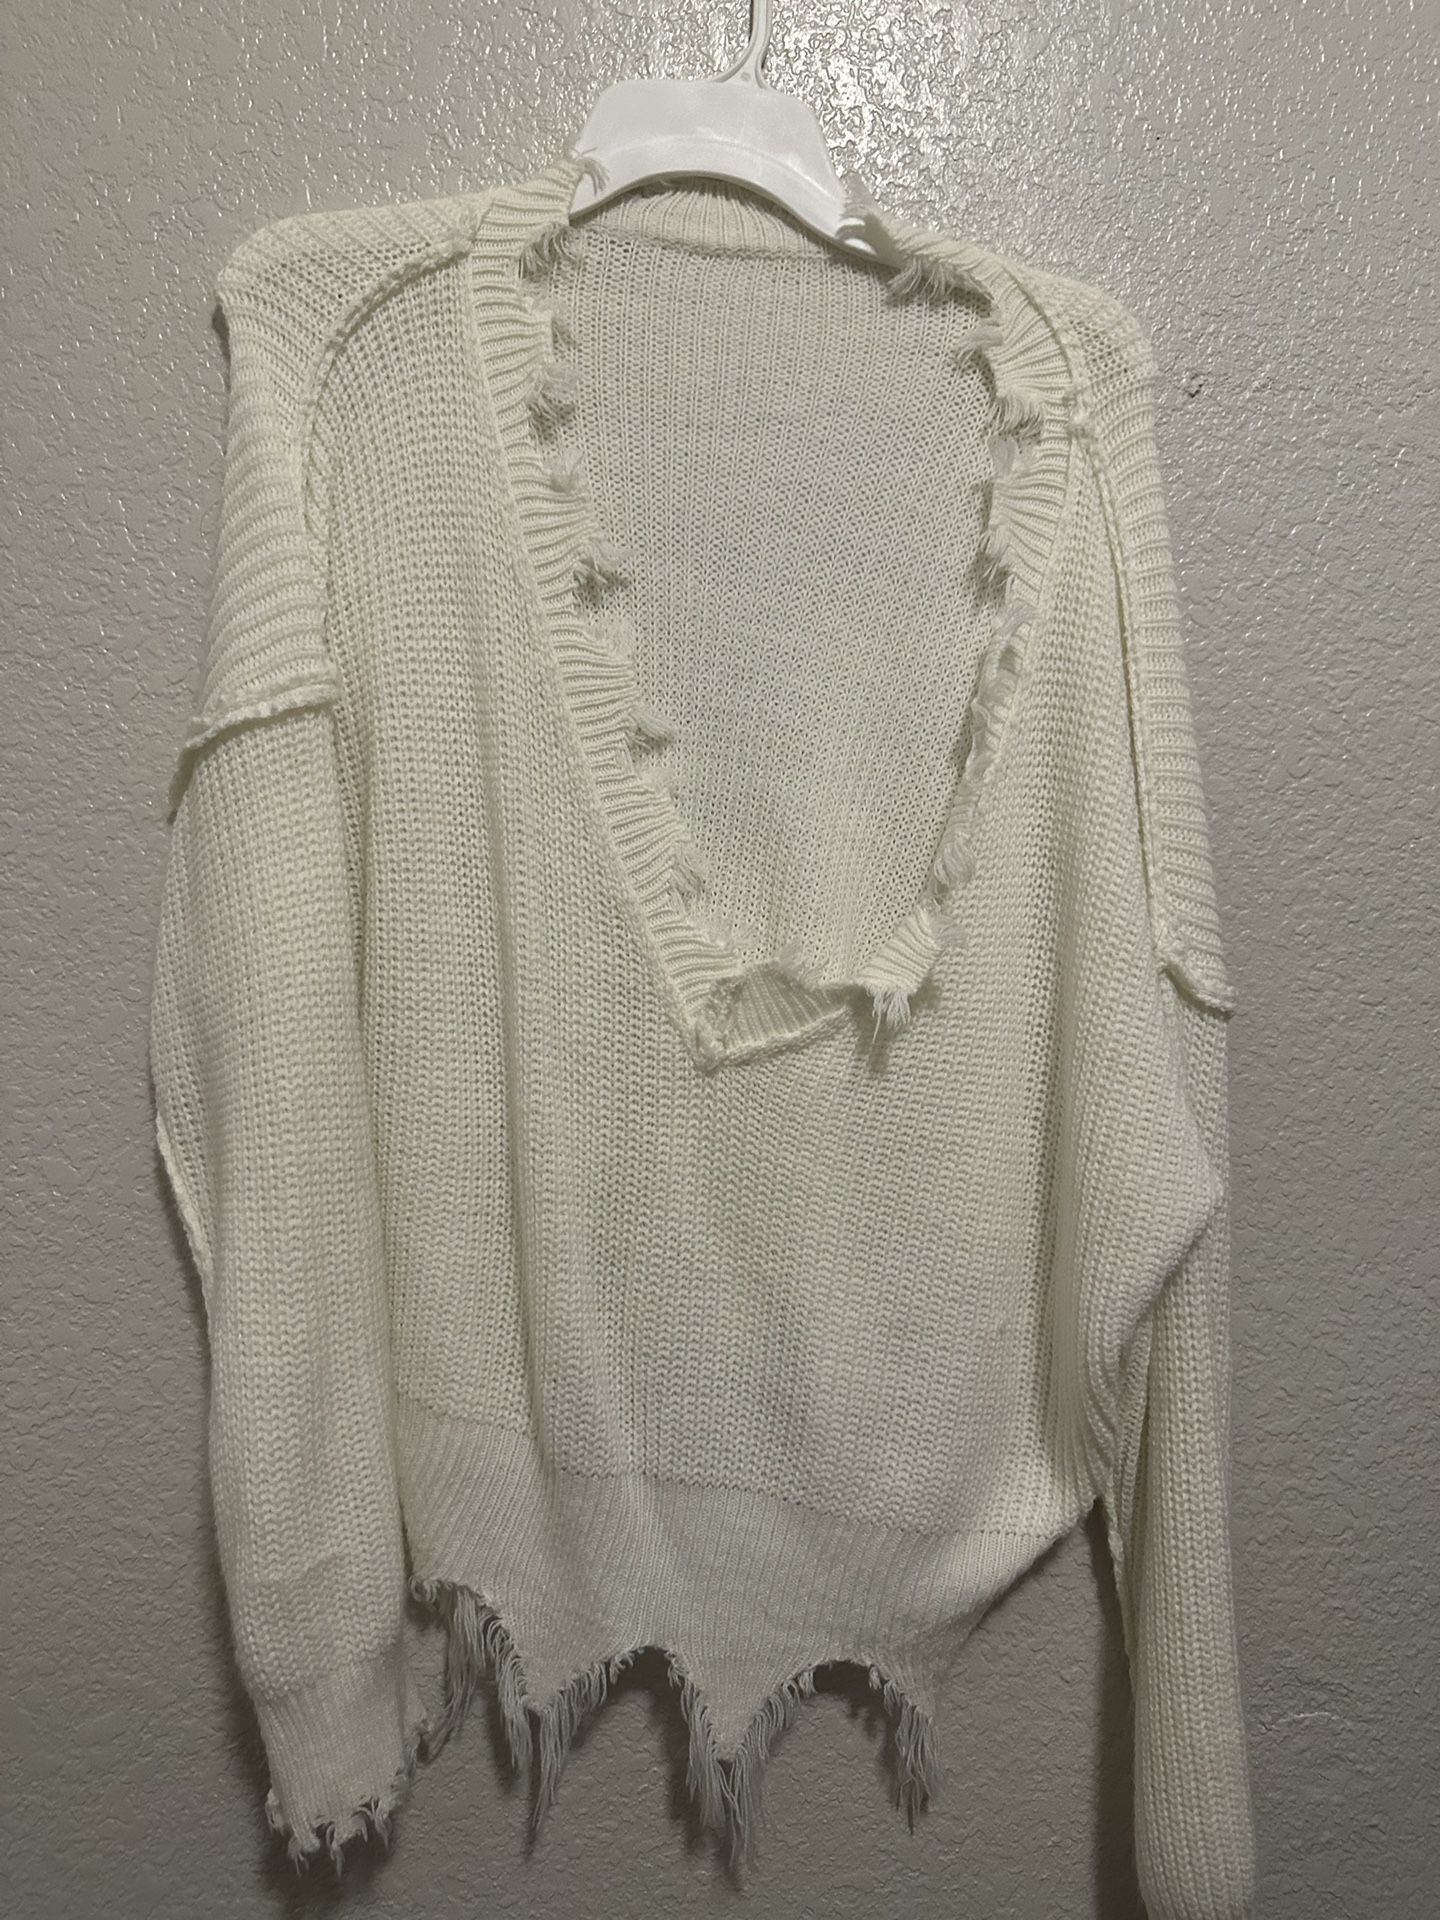 White Fringed Knit Sweater